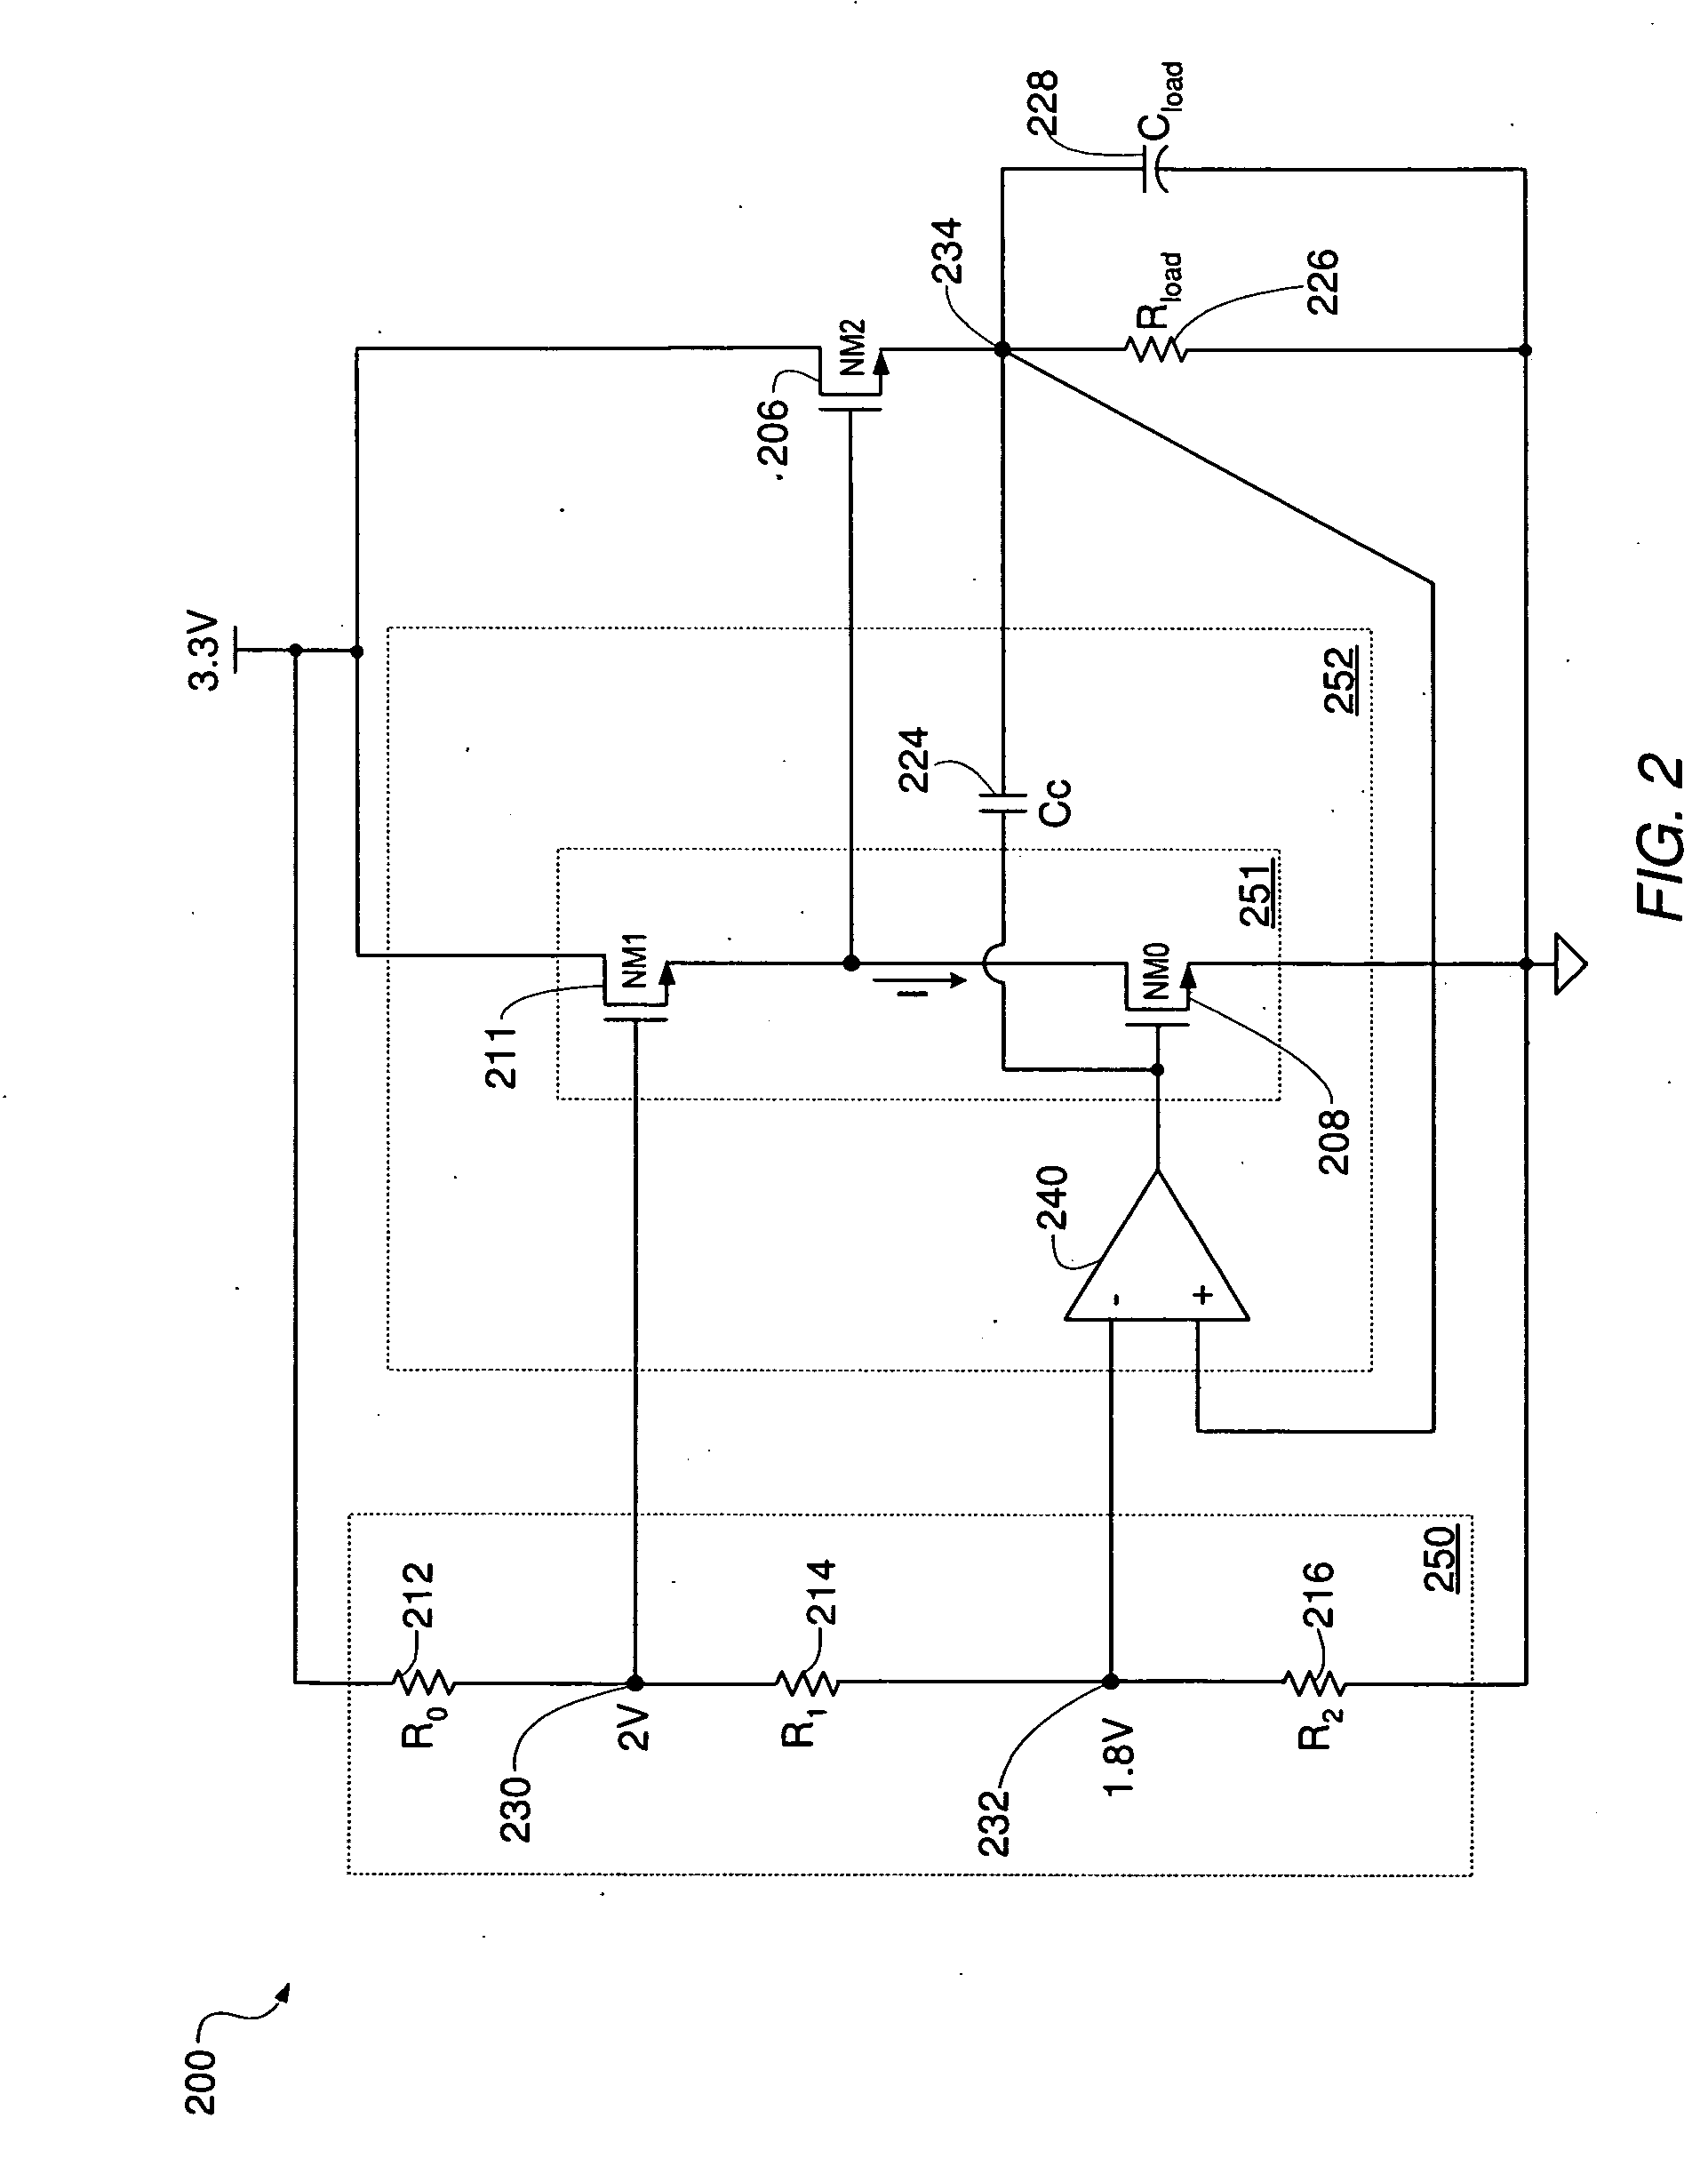 Voltage regulator with inherent voltage clamping